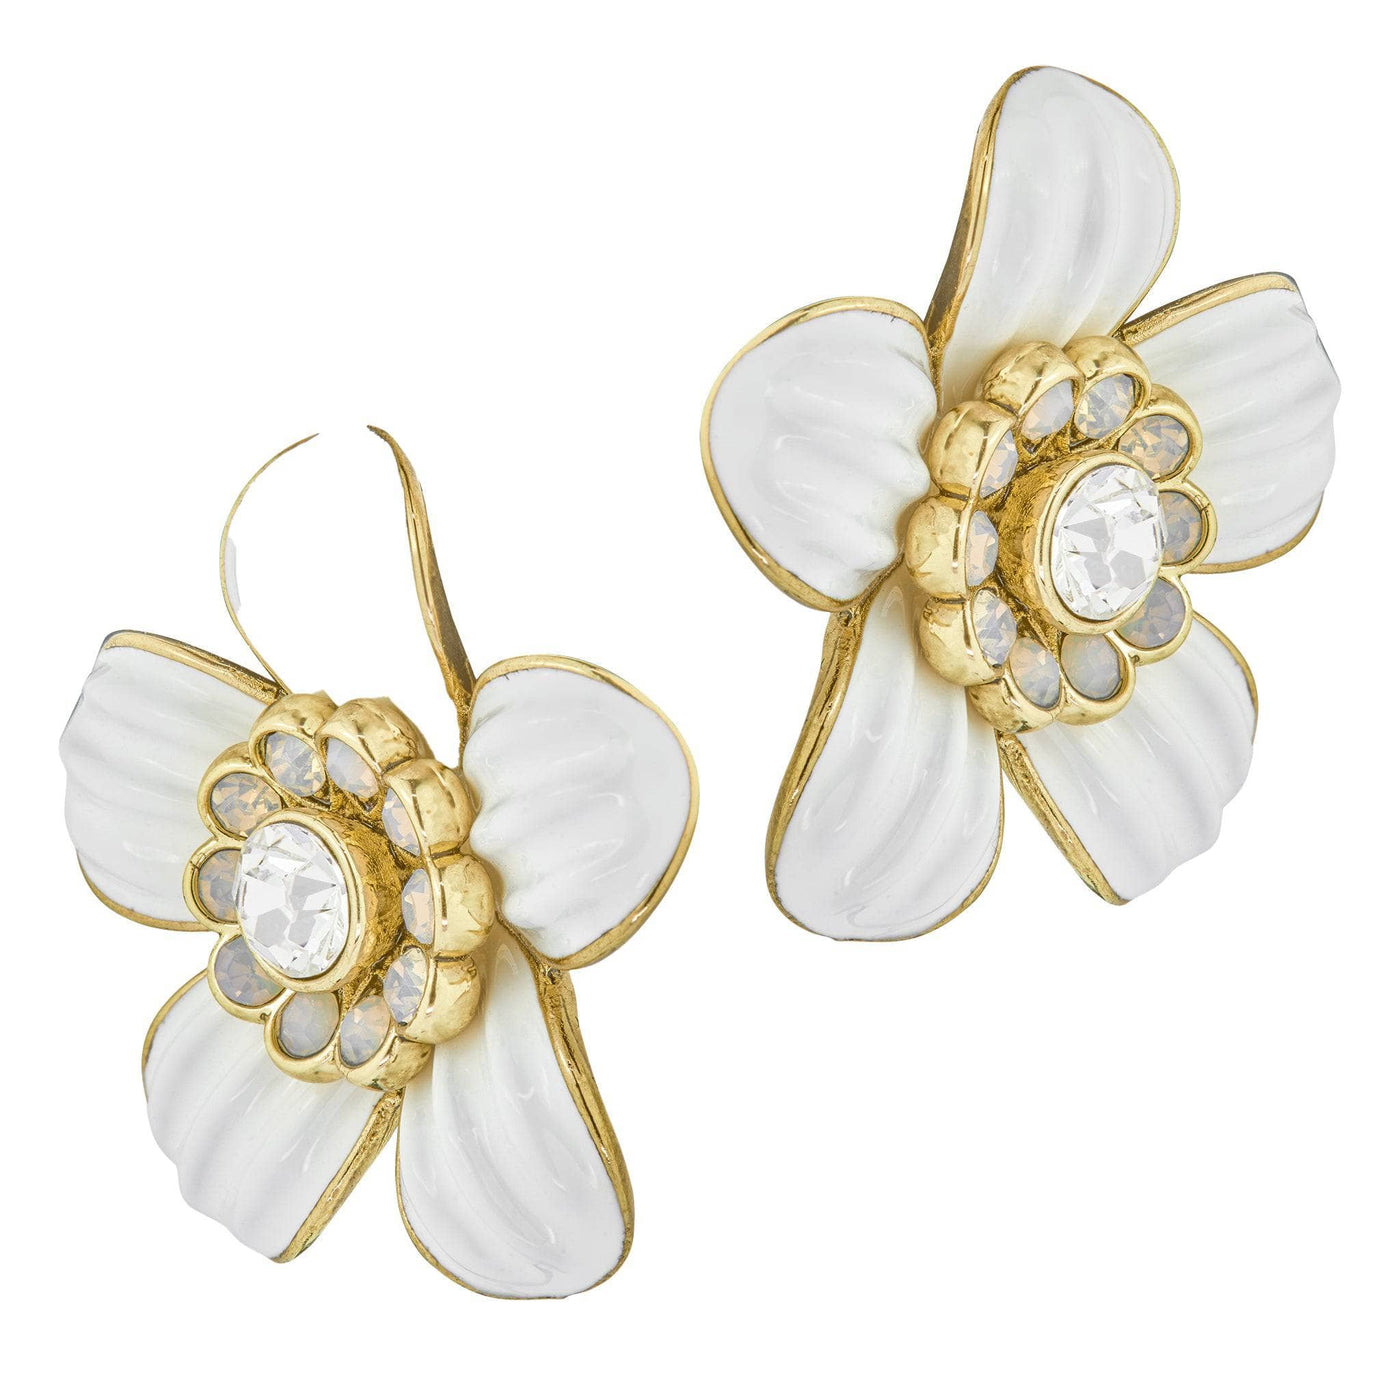 HEIDI DAUS®"Flower Super Power" Crystal & Enamel Floral Button Earrings